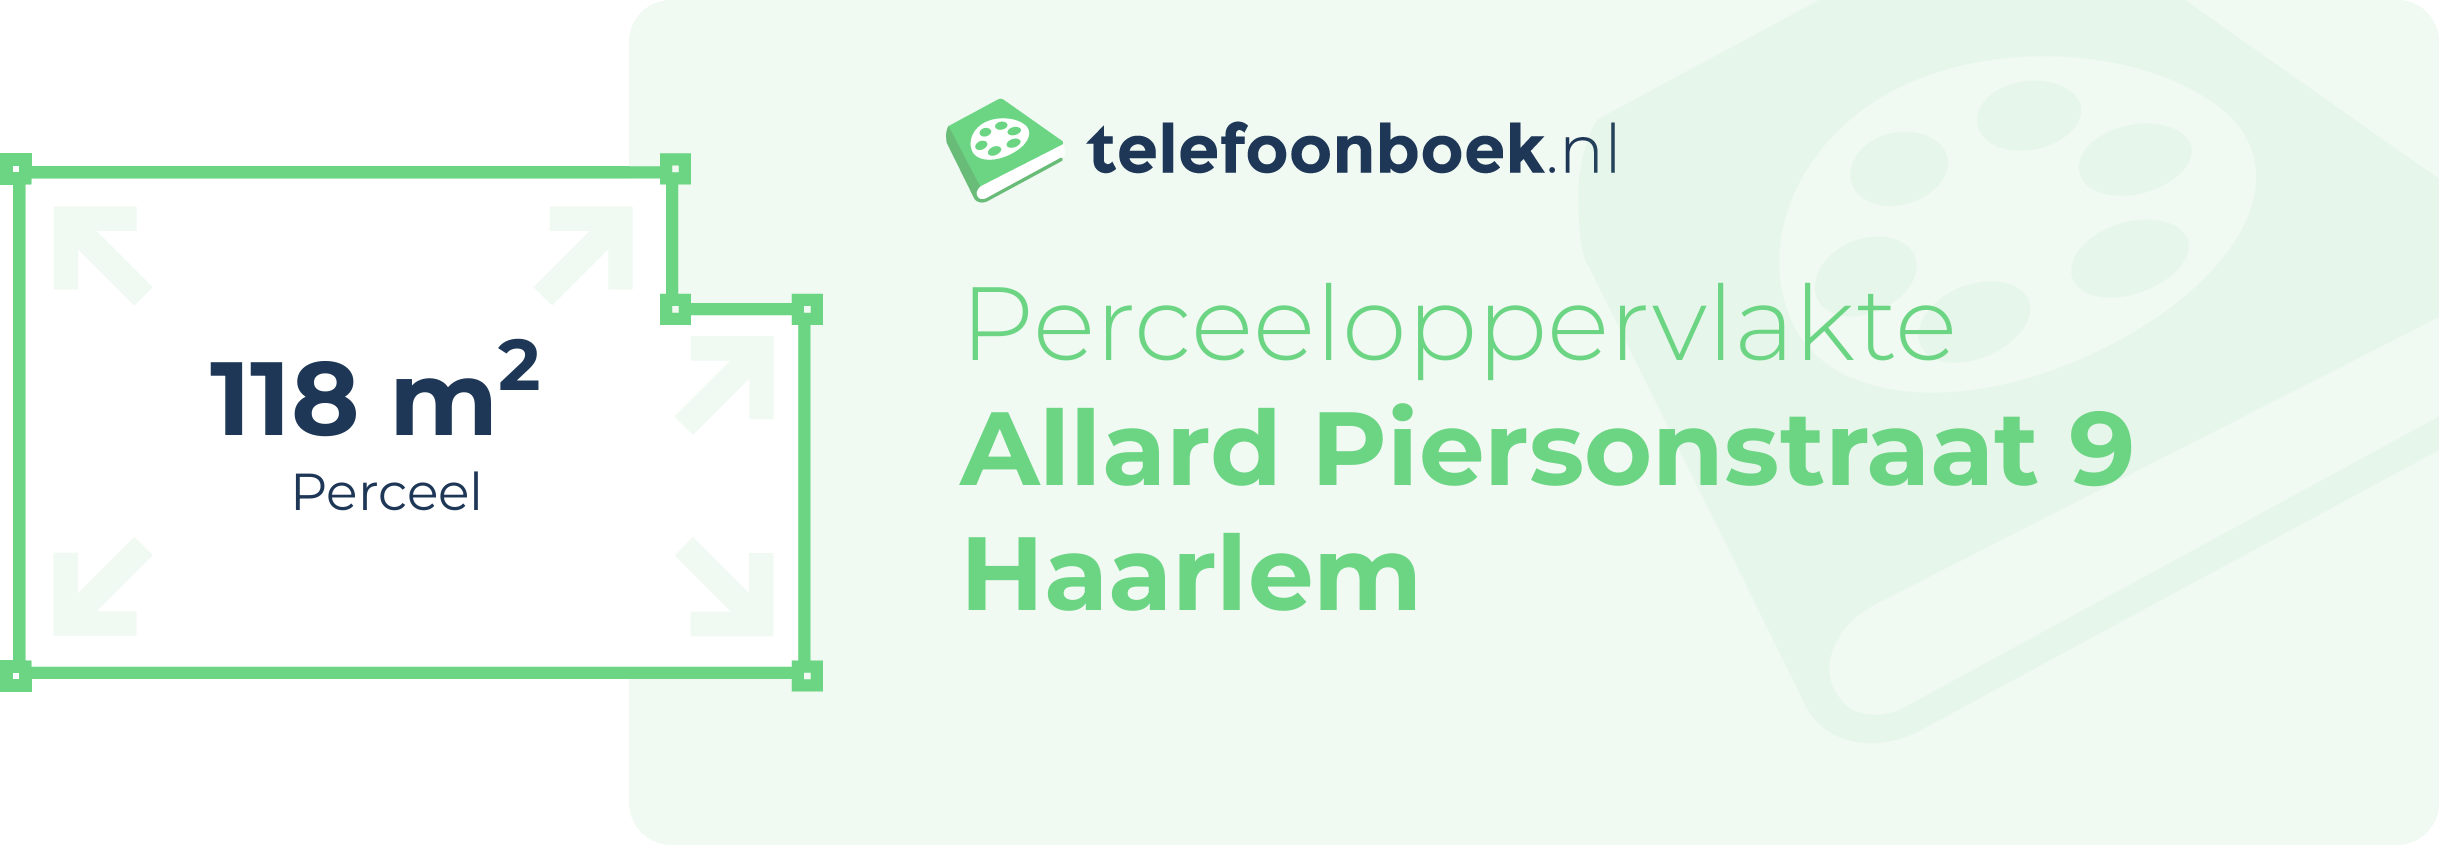 Perceeloppervlakte Allard Piersonstraat 9 Haarlem